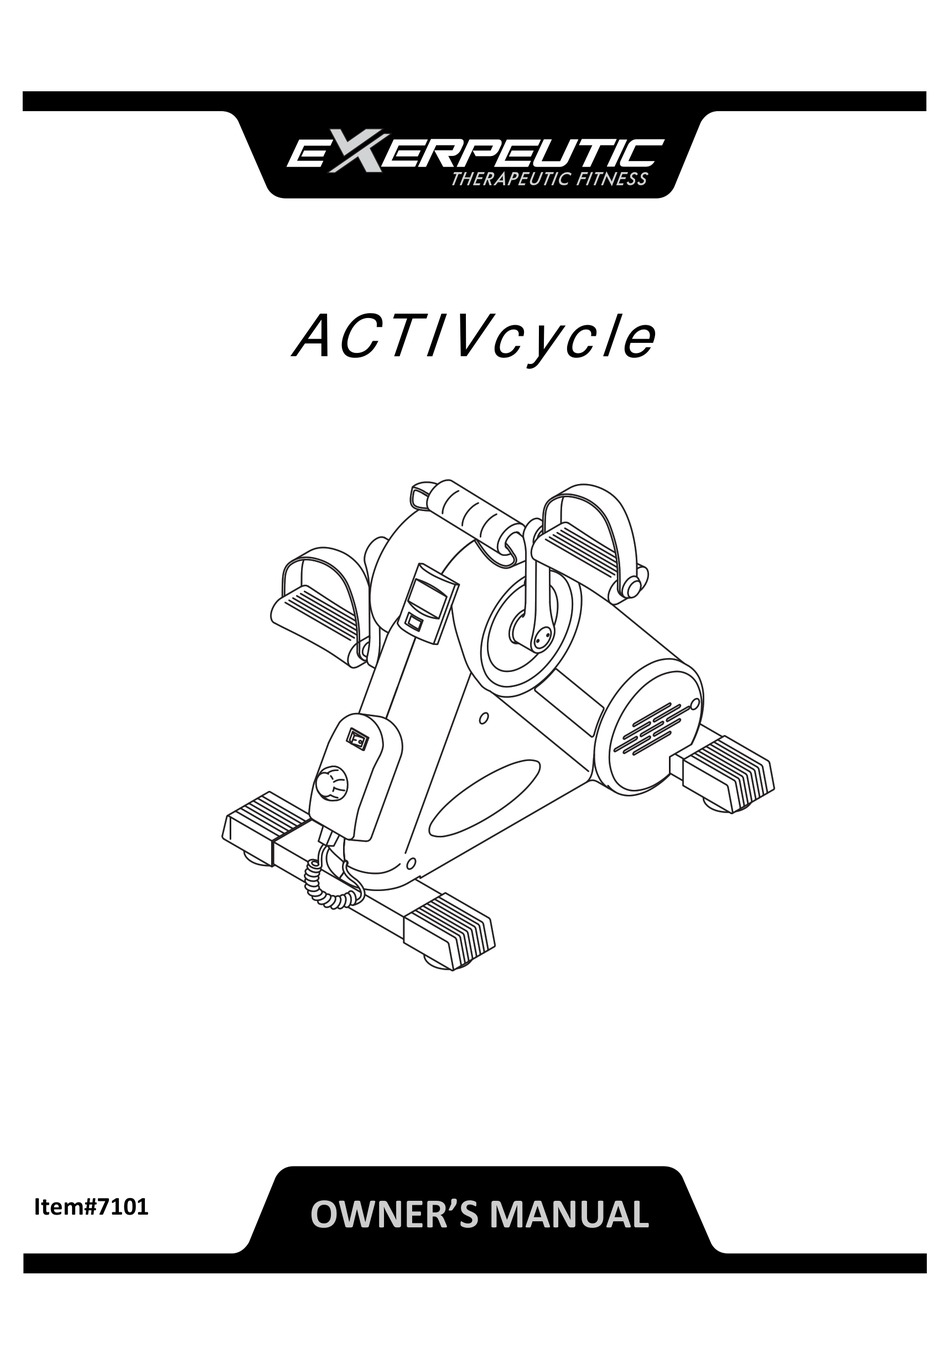 activcycle